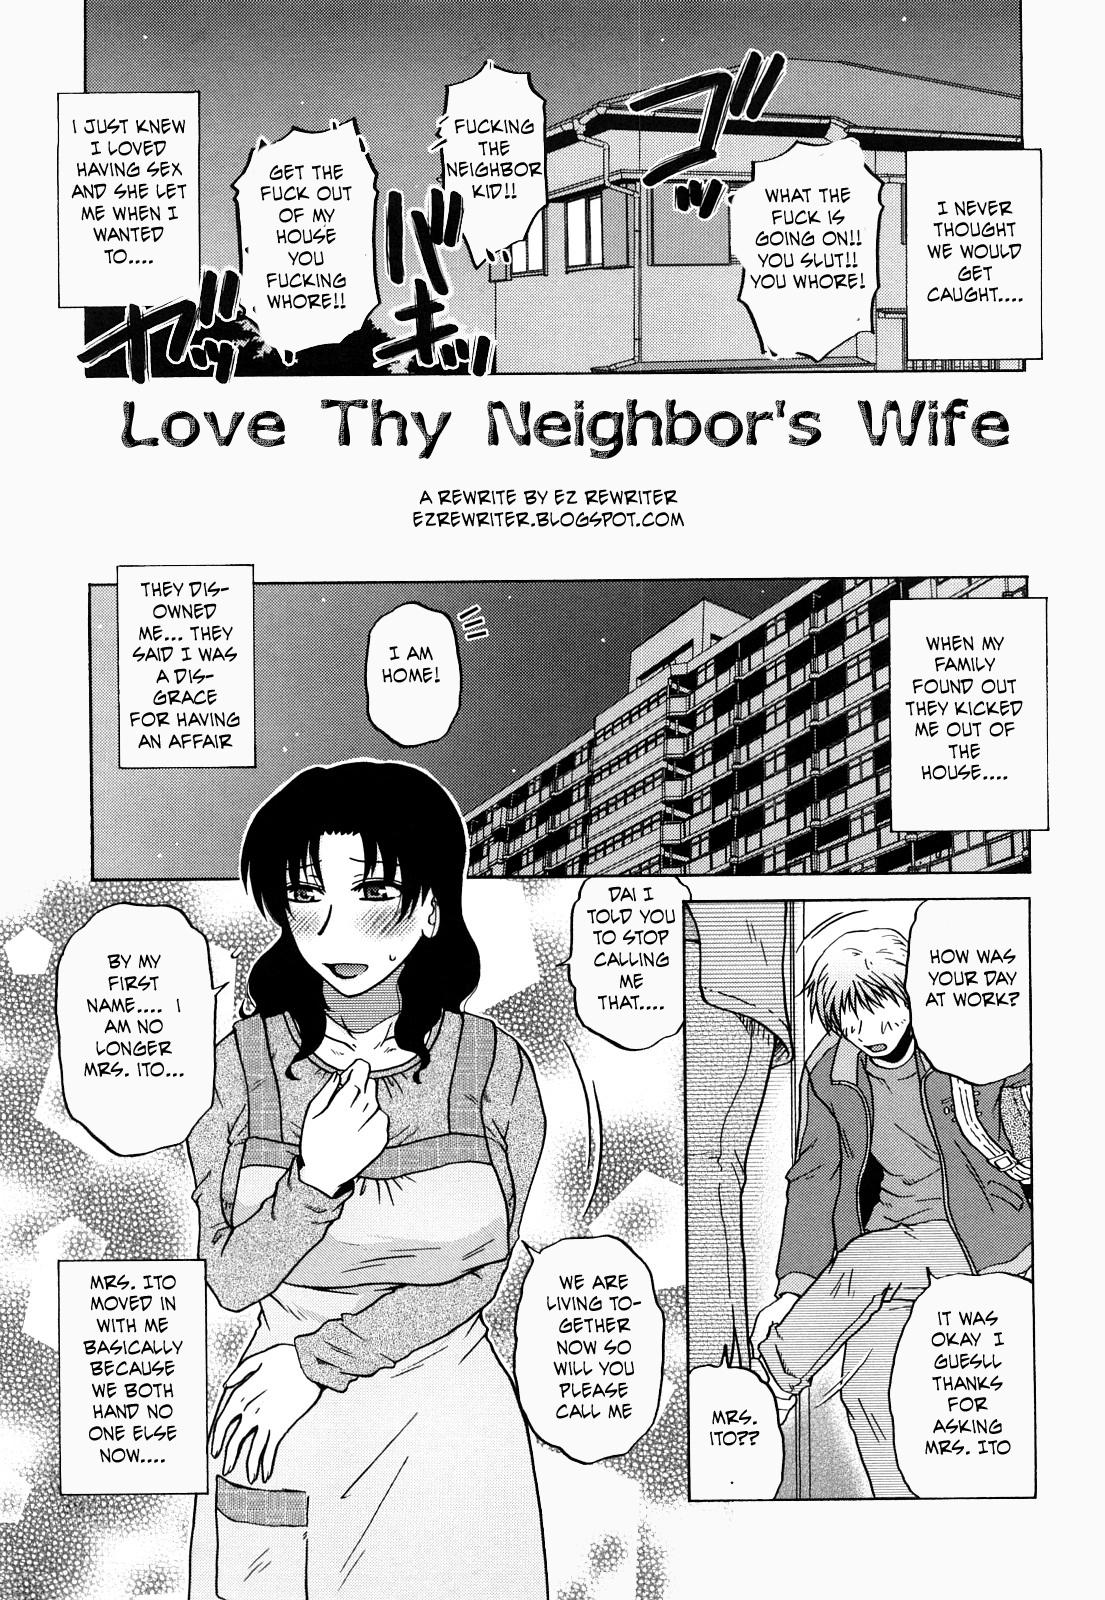 Gays Love Thy Neighbor's Wife Parody - Page 3